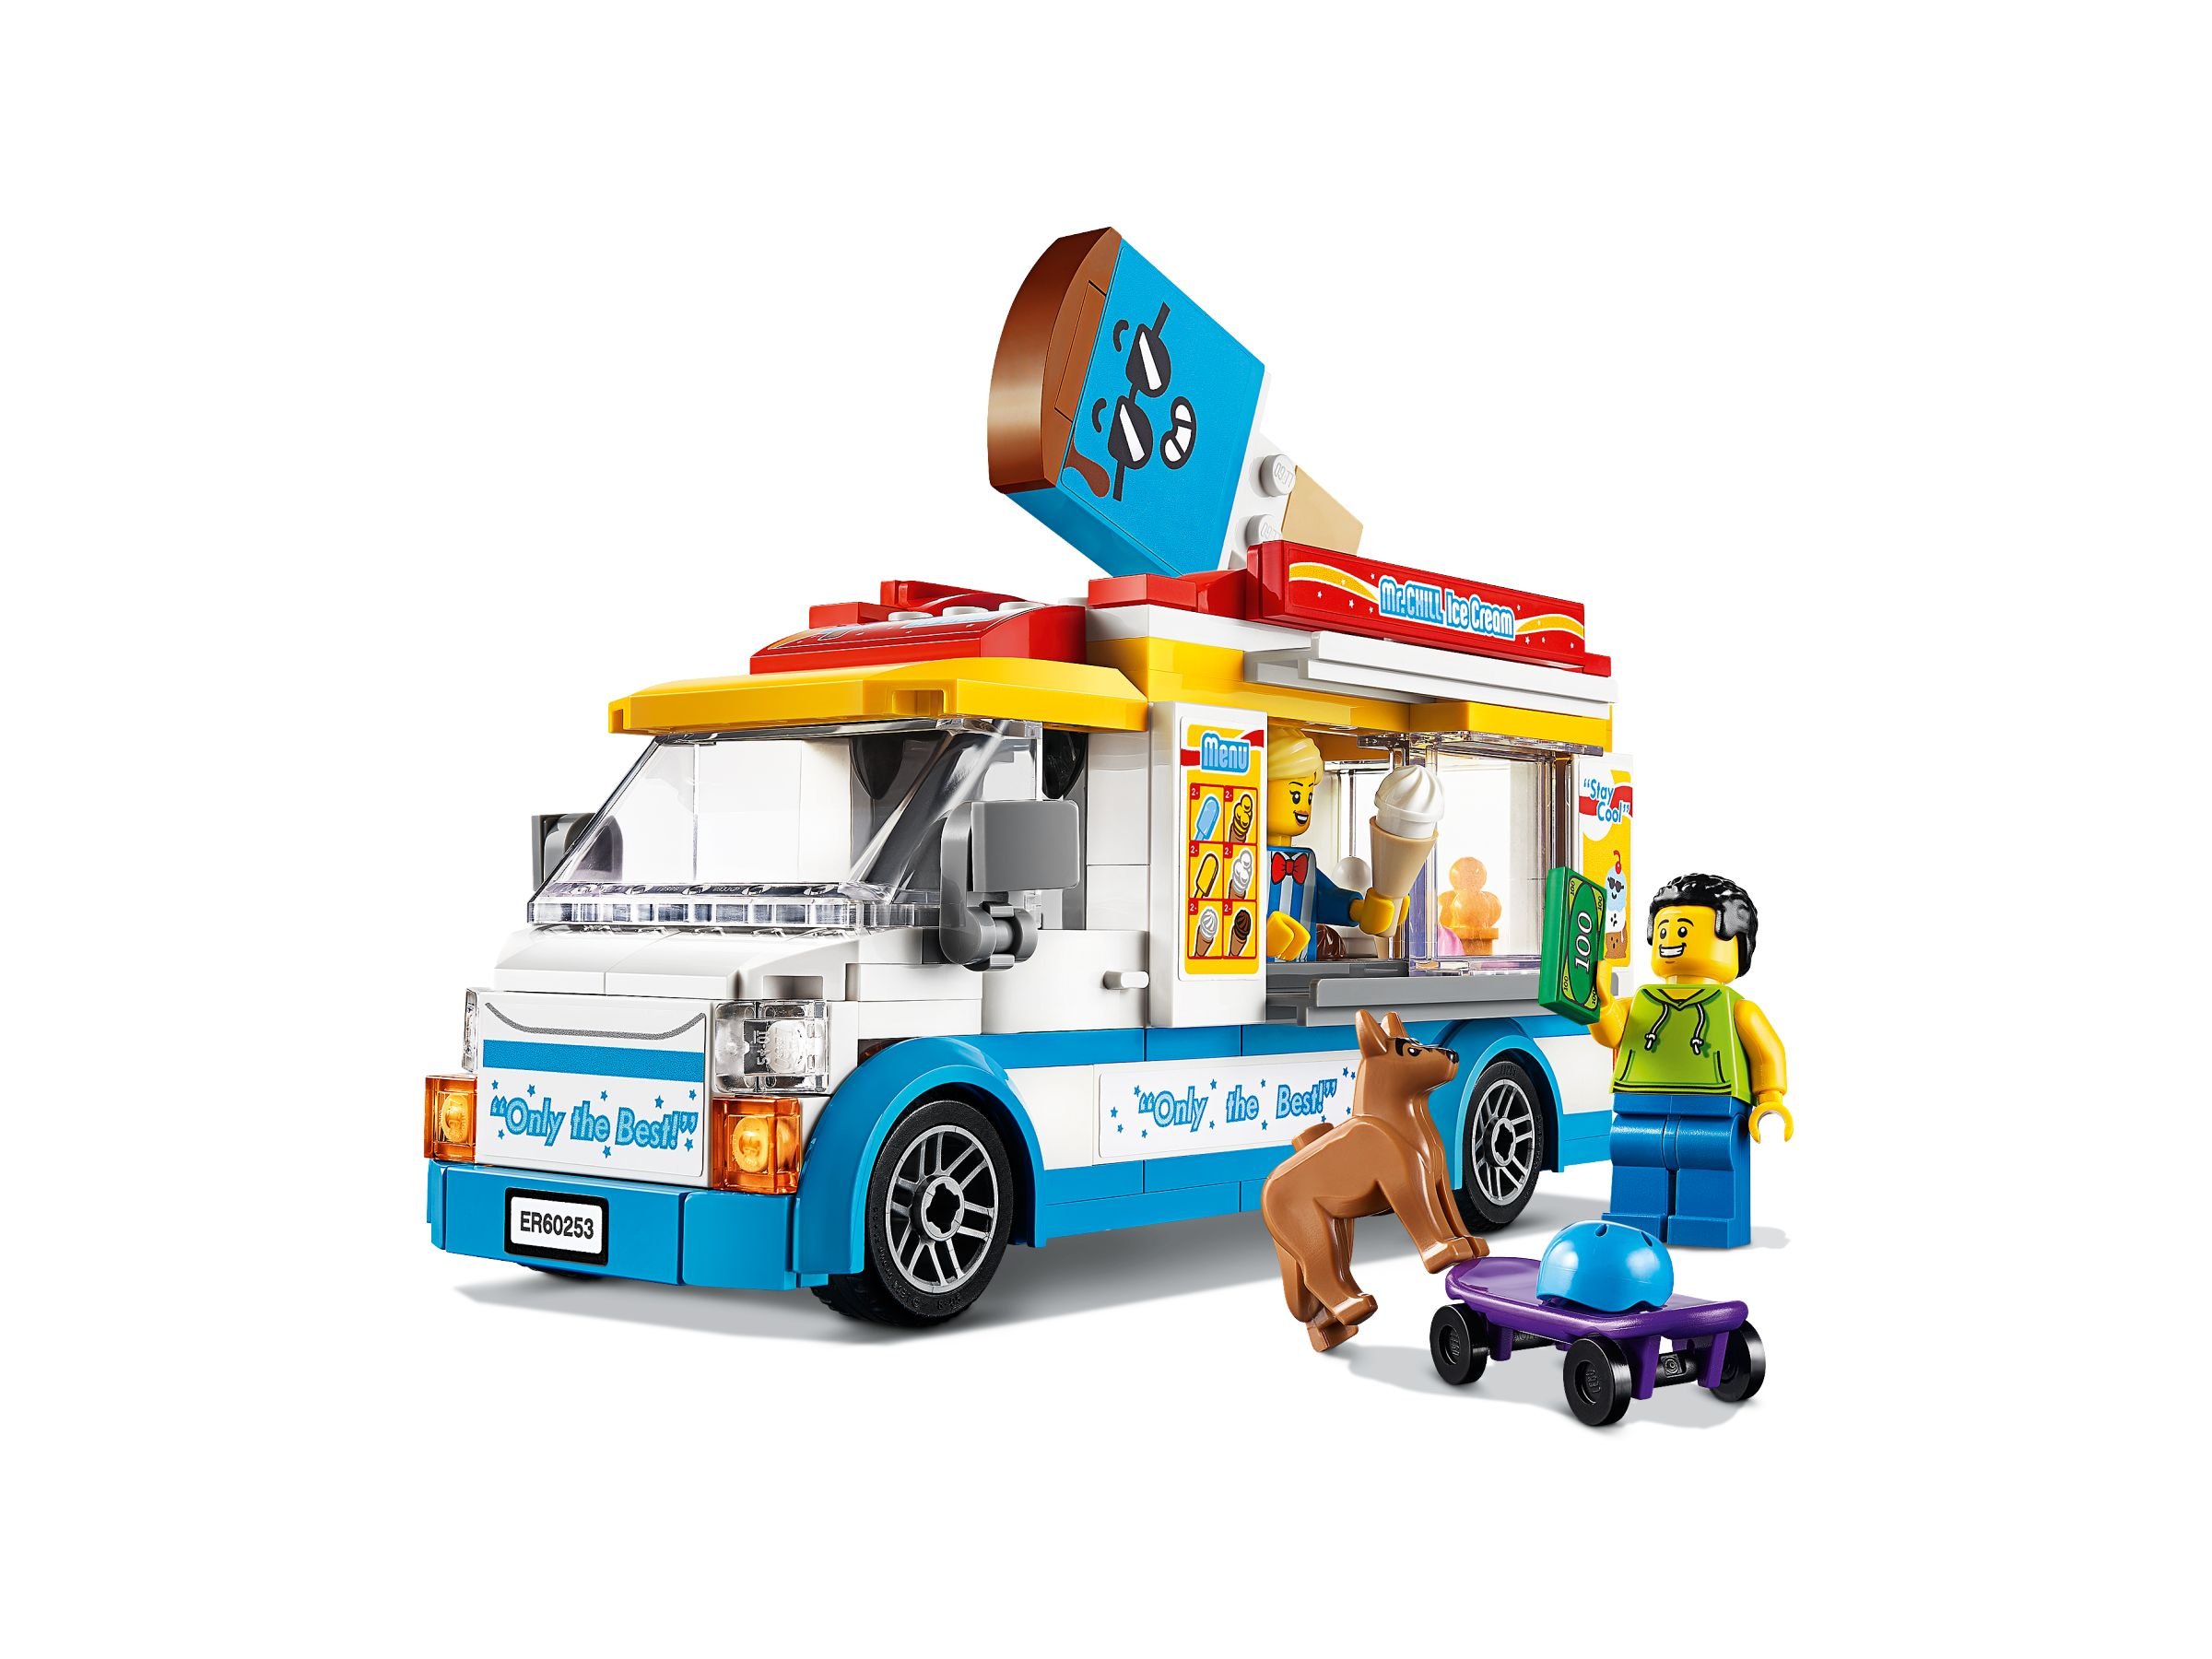 LEGO City 60253 Eiswagen LEGO_60253_alt2.jpg